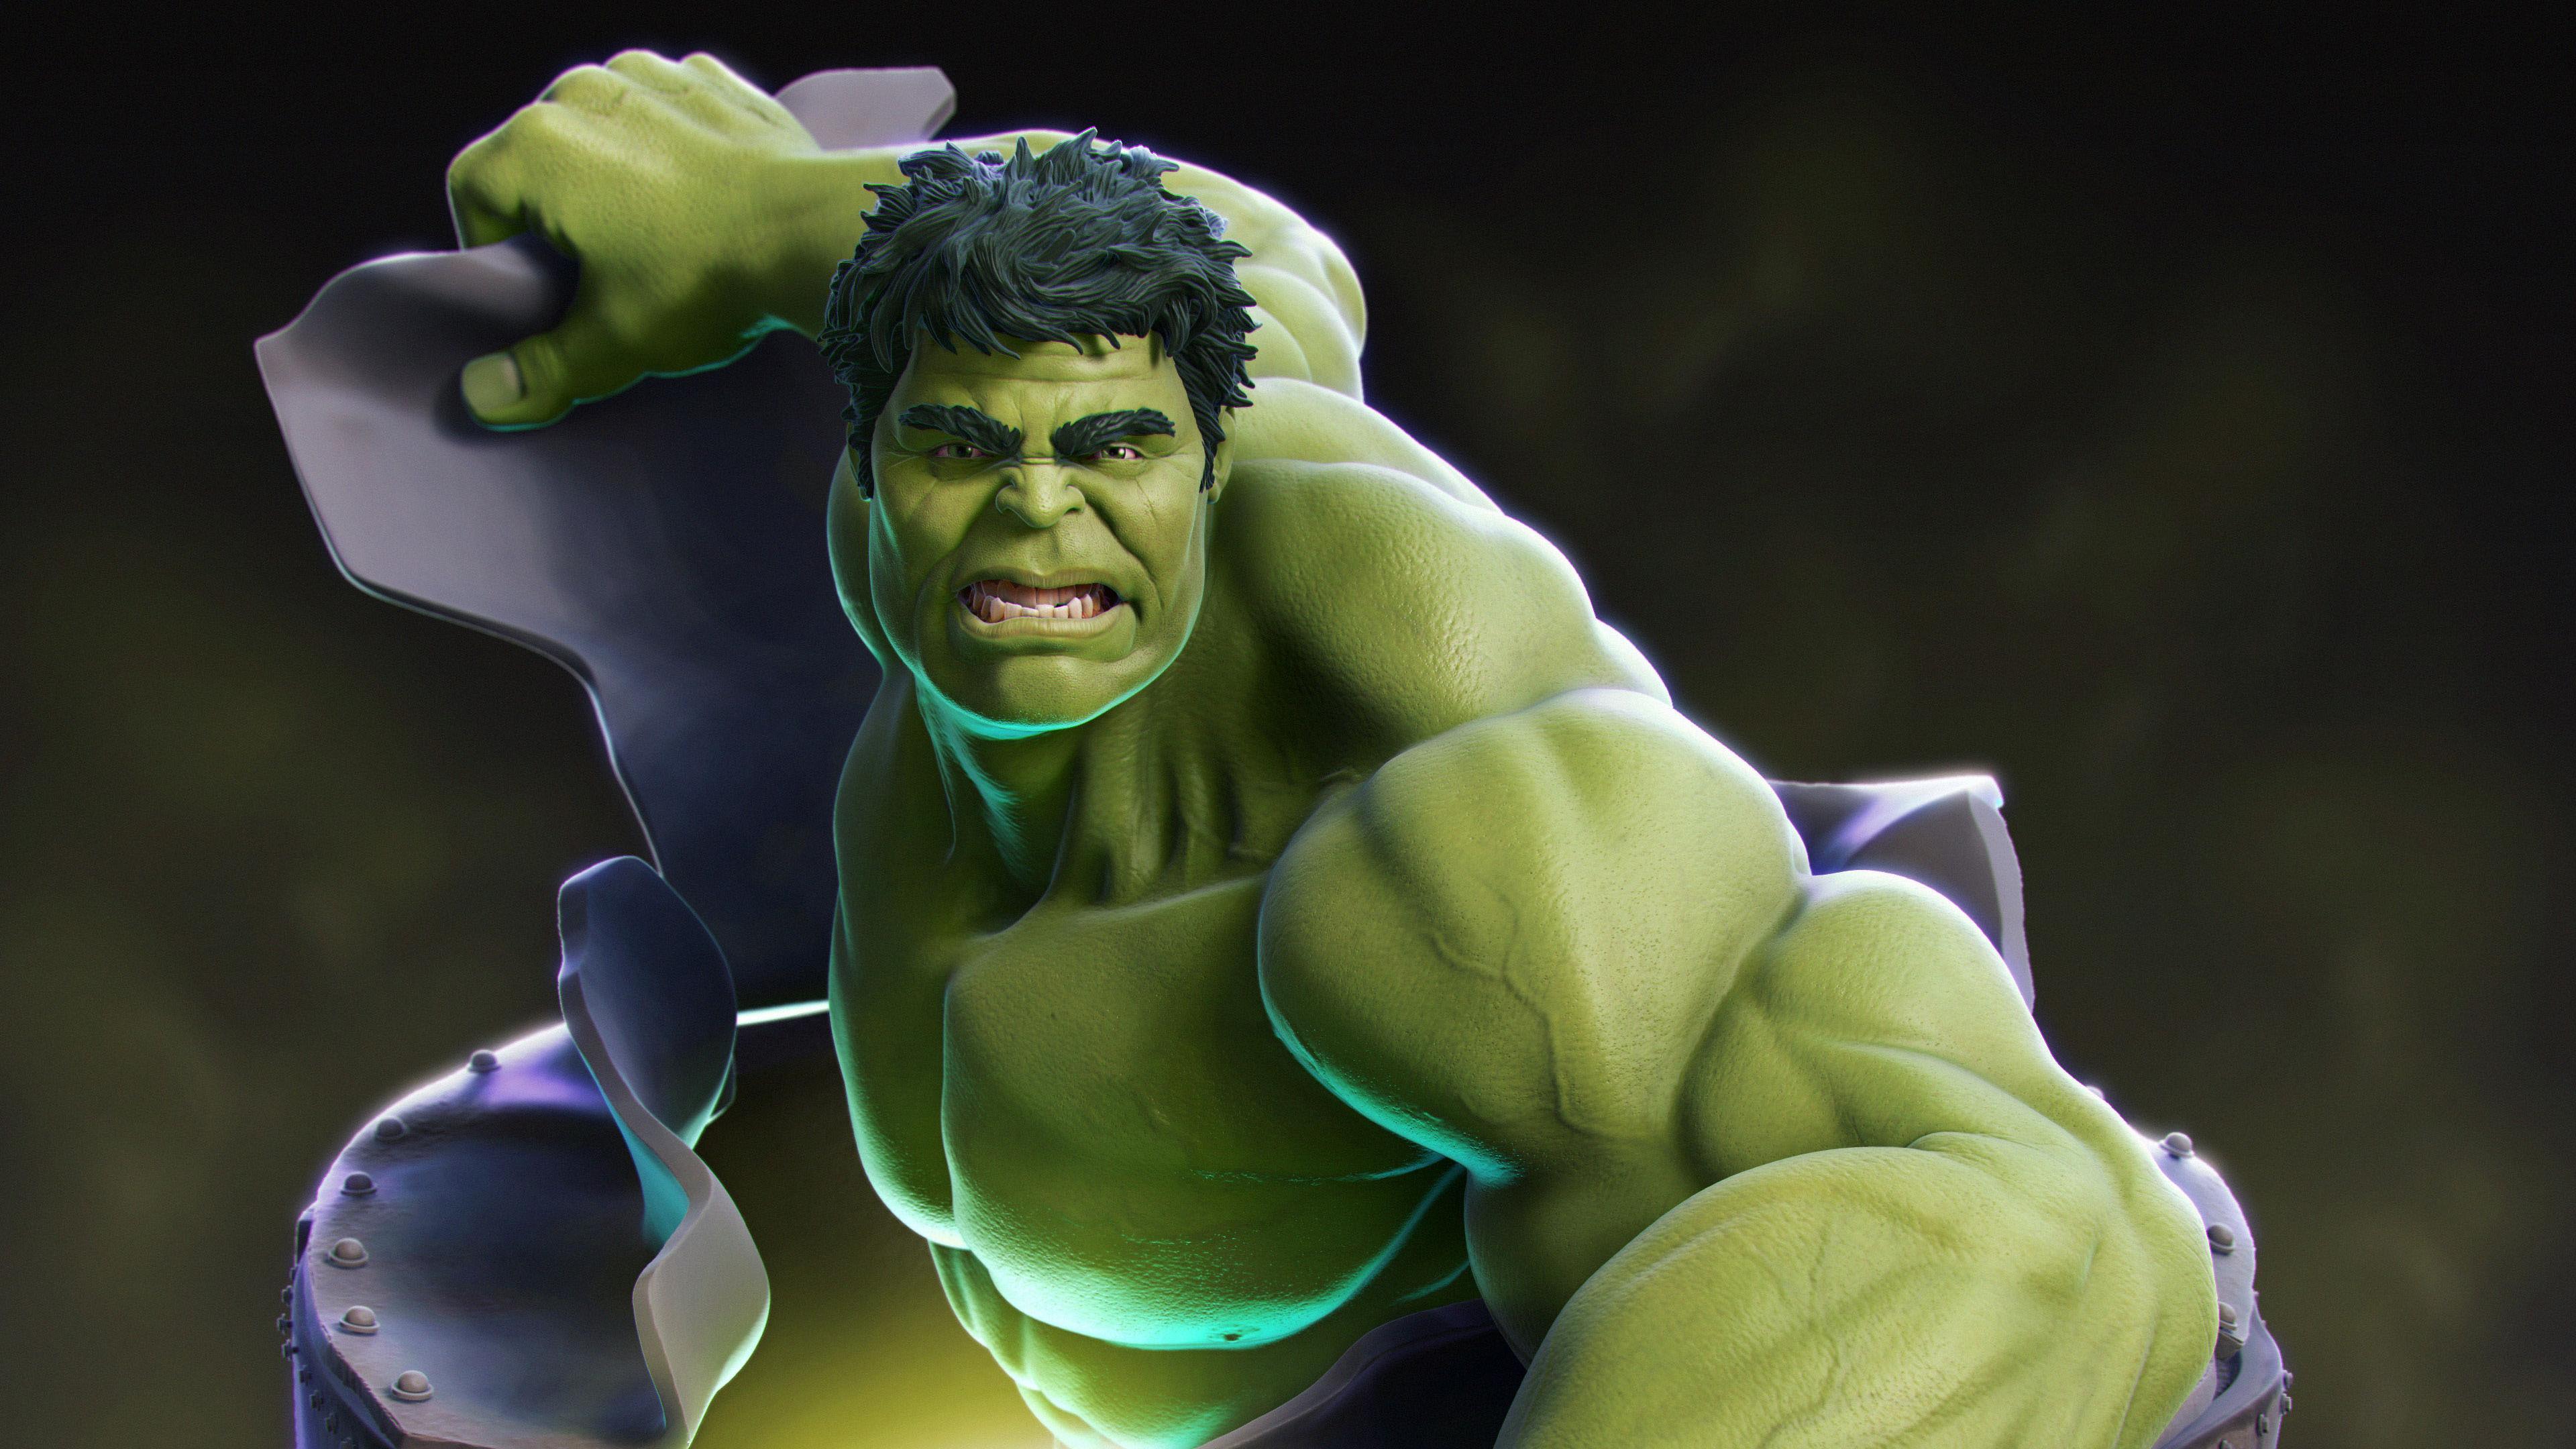 Hulk CGI, HD Superheroes, 4k Wallpaper, Image, Background, Photo